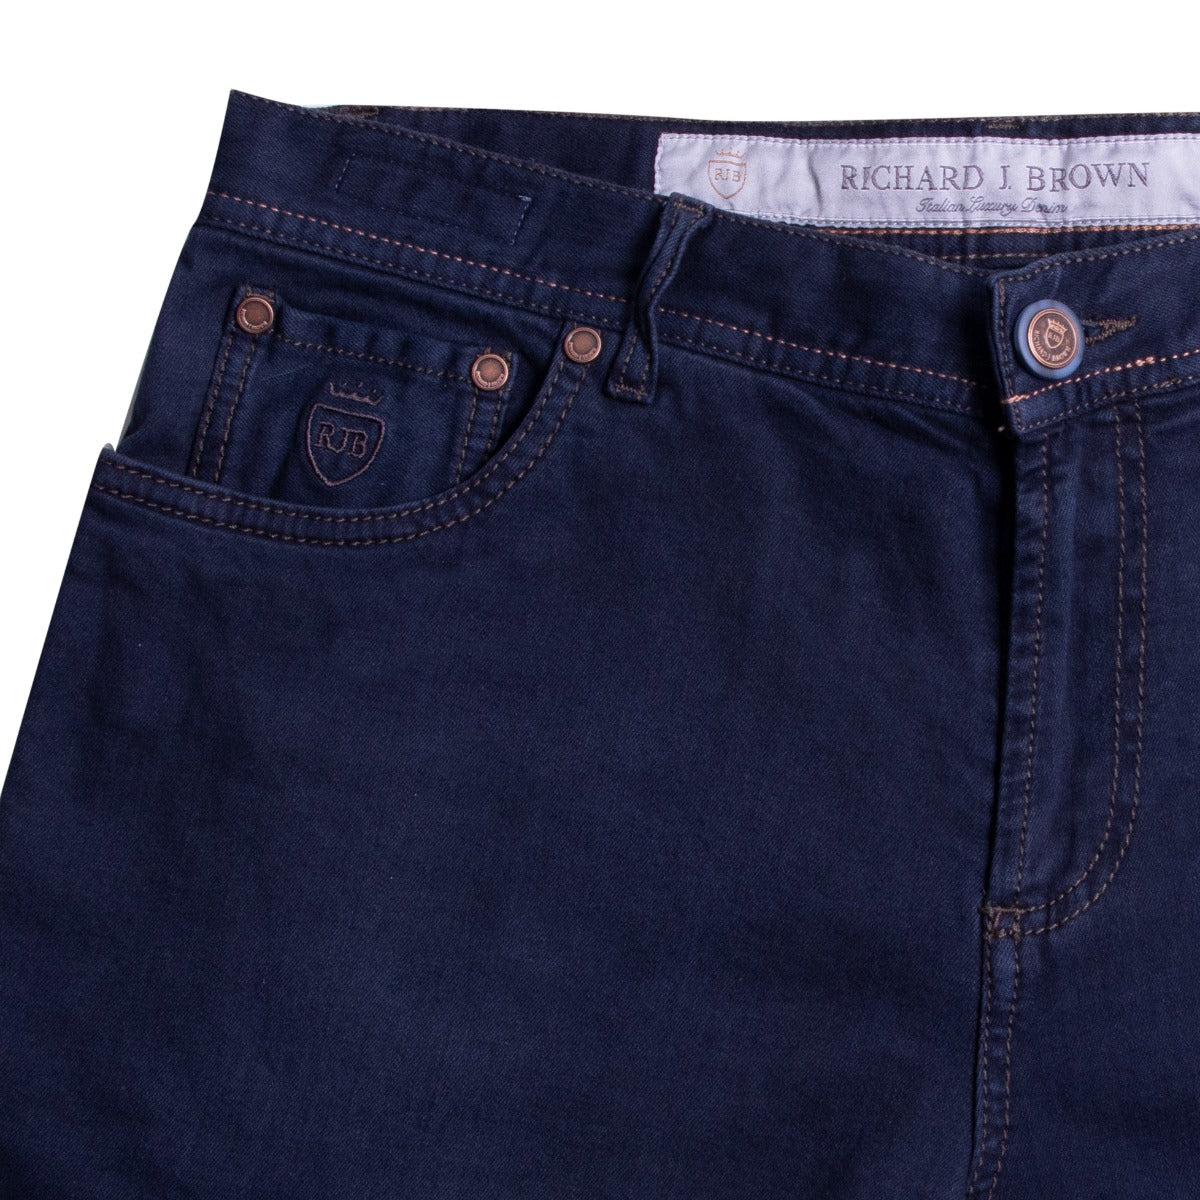 Dark Rinse 'Milano' Regular Fit Jeans  Richard J Brown   